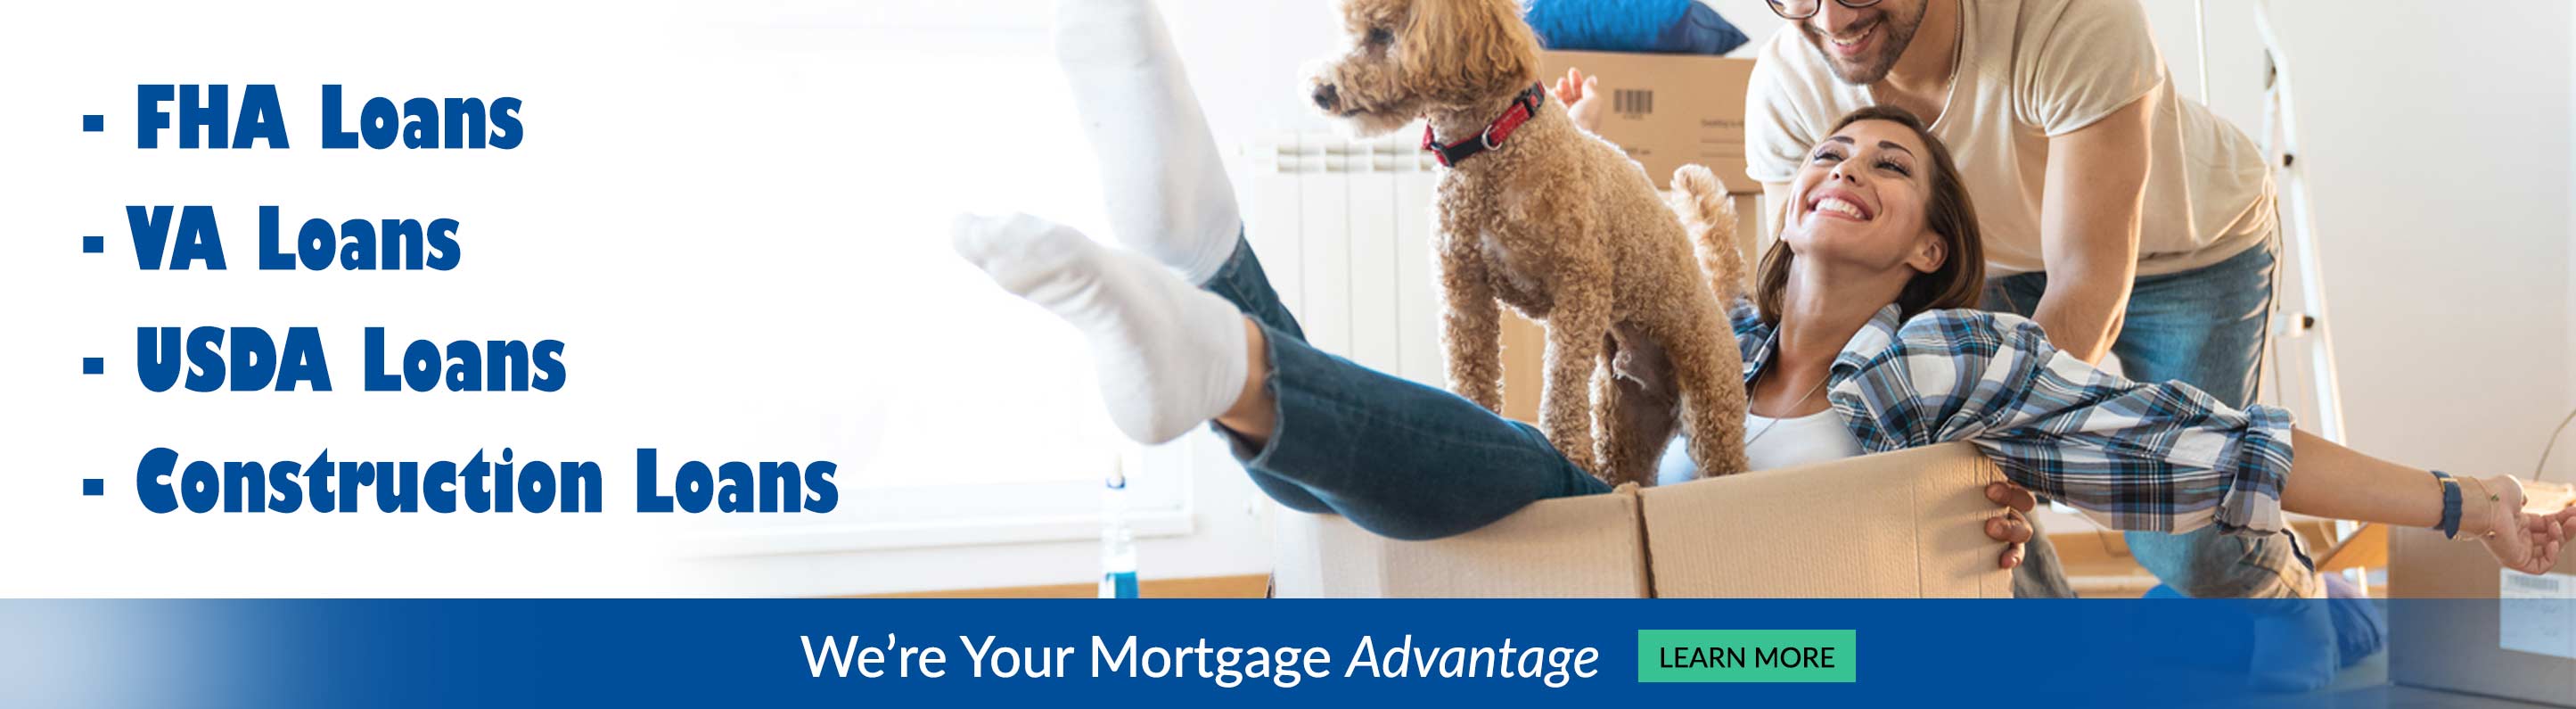 FHA Loans, VA Loans, USDA Loans, Construction Loans. We're your mortgage advantage. Learn More